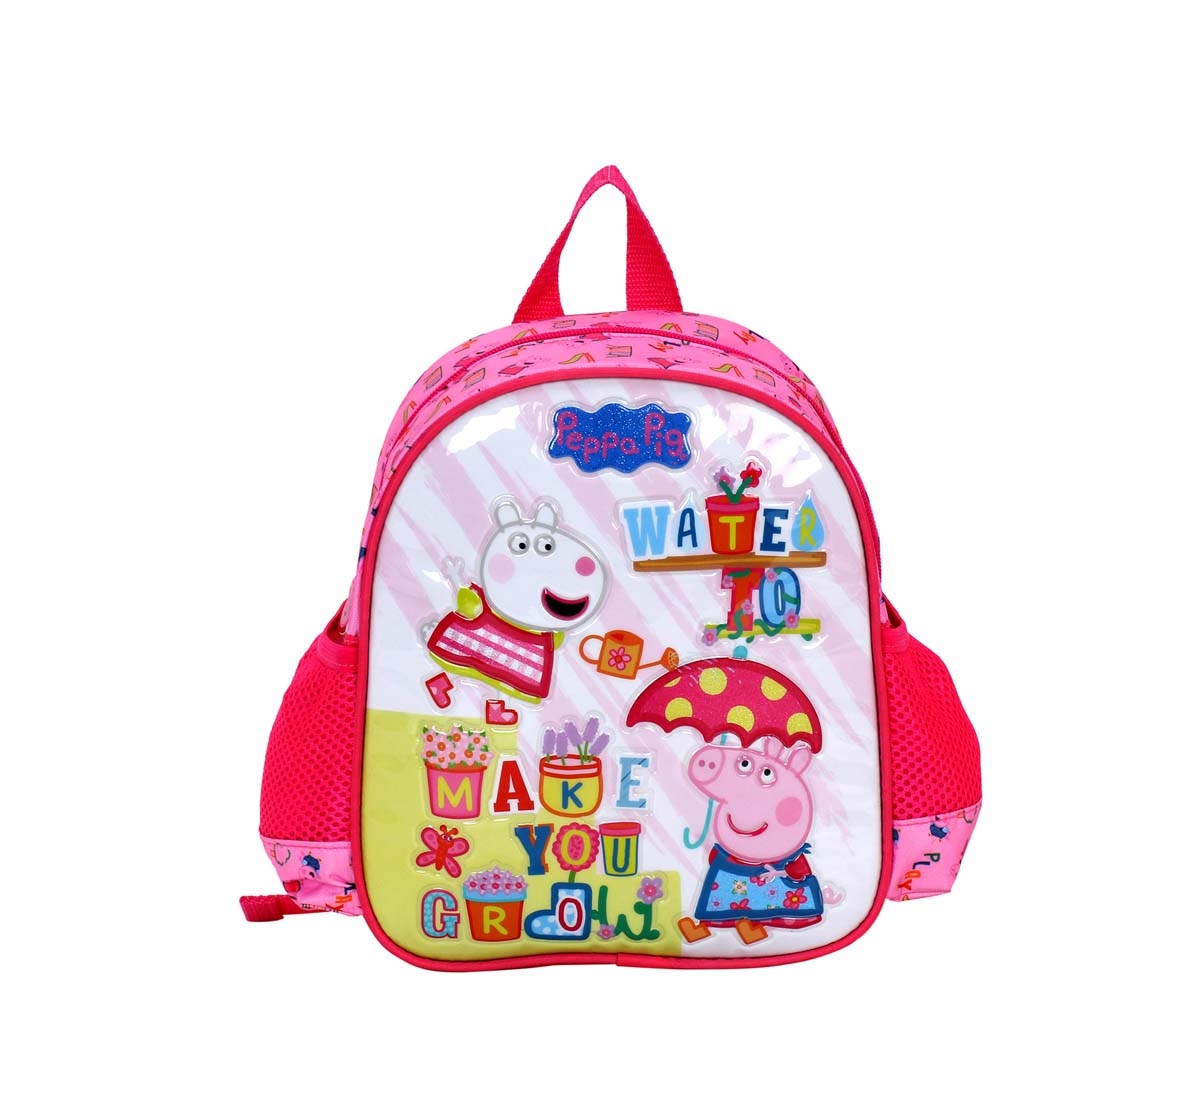 Peppa Pig | Peppa Pig Make You Grow 10 Backpack Bags for Kids age 3Y+ 